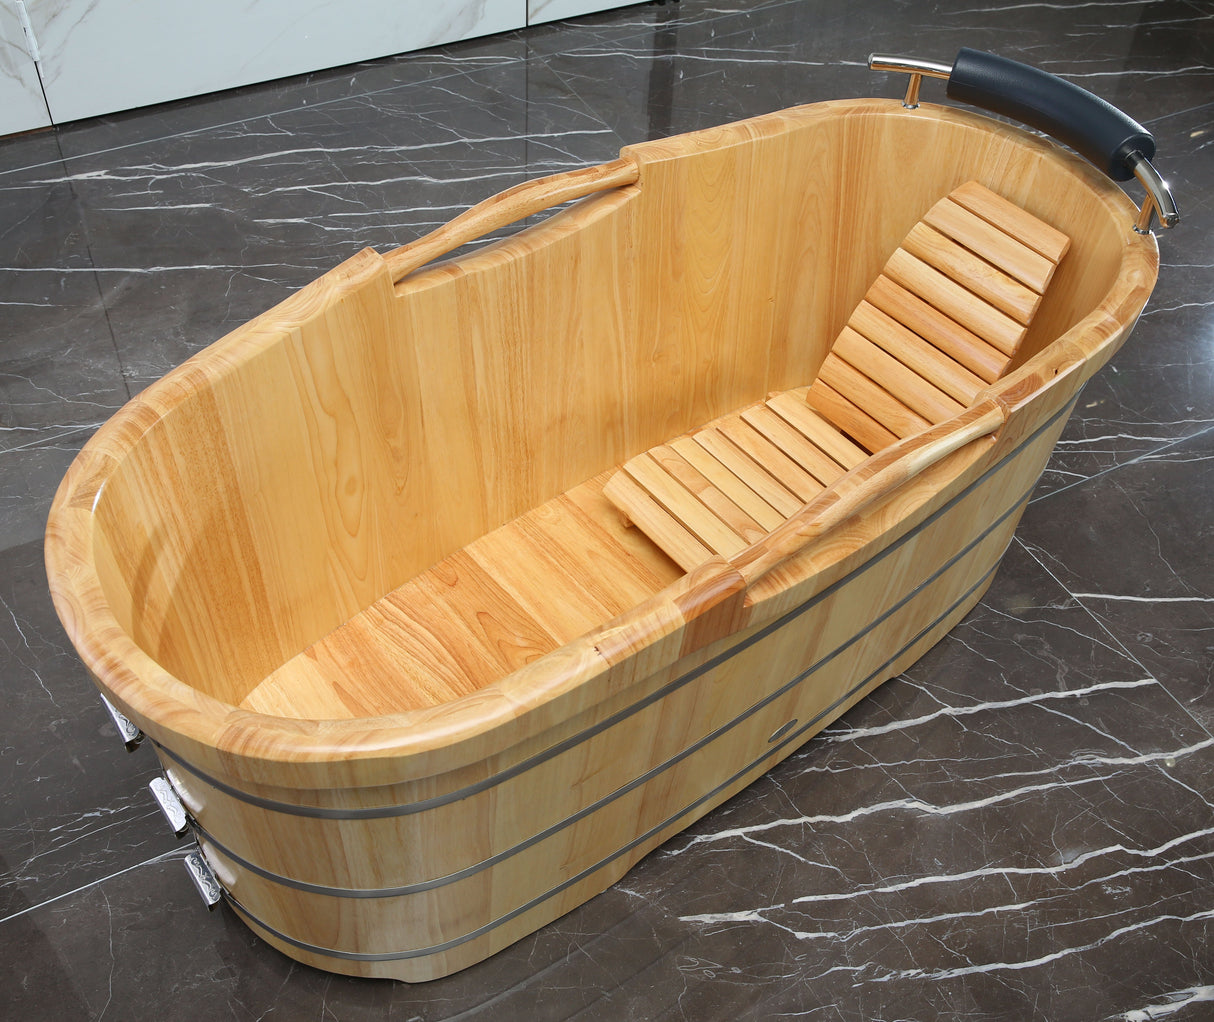 ALFI | AB1163 61" Free Standing Wooden Bathtub with Cushion Headrest